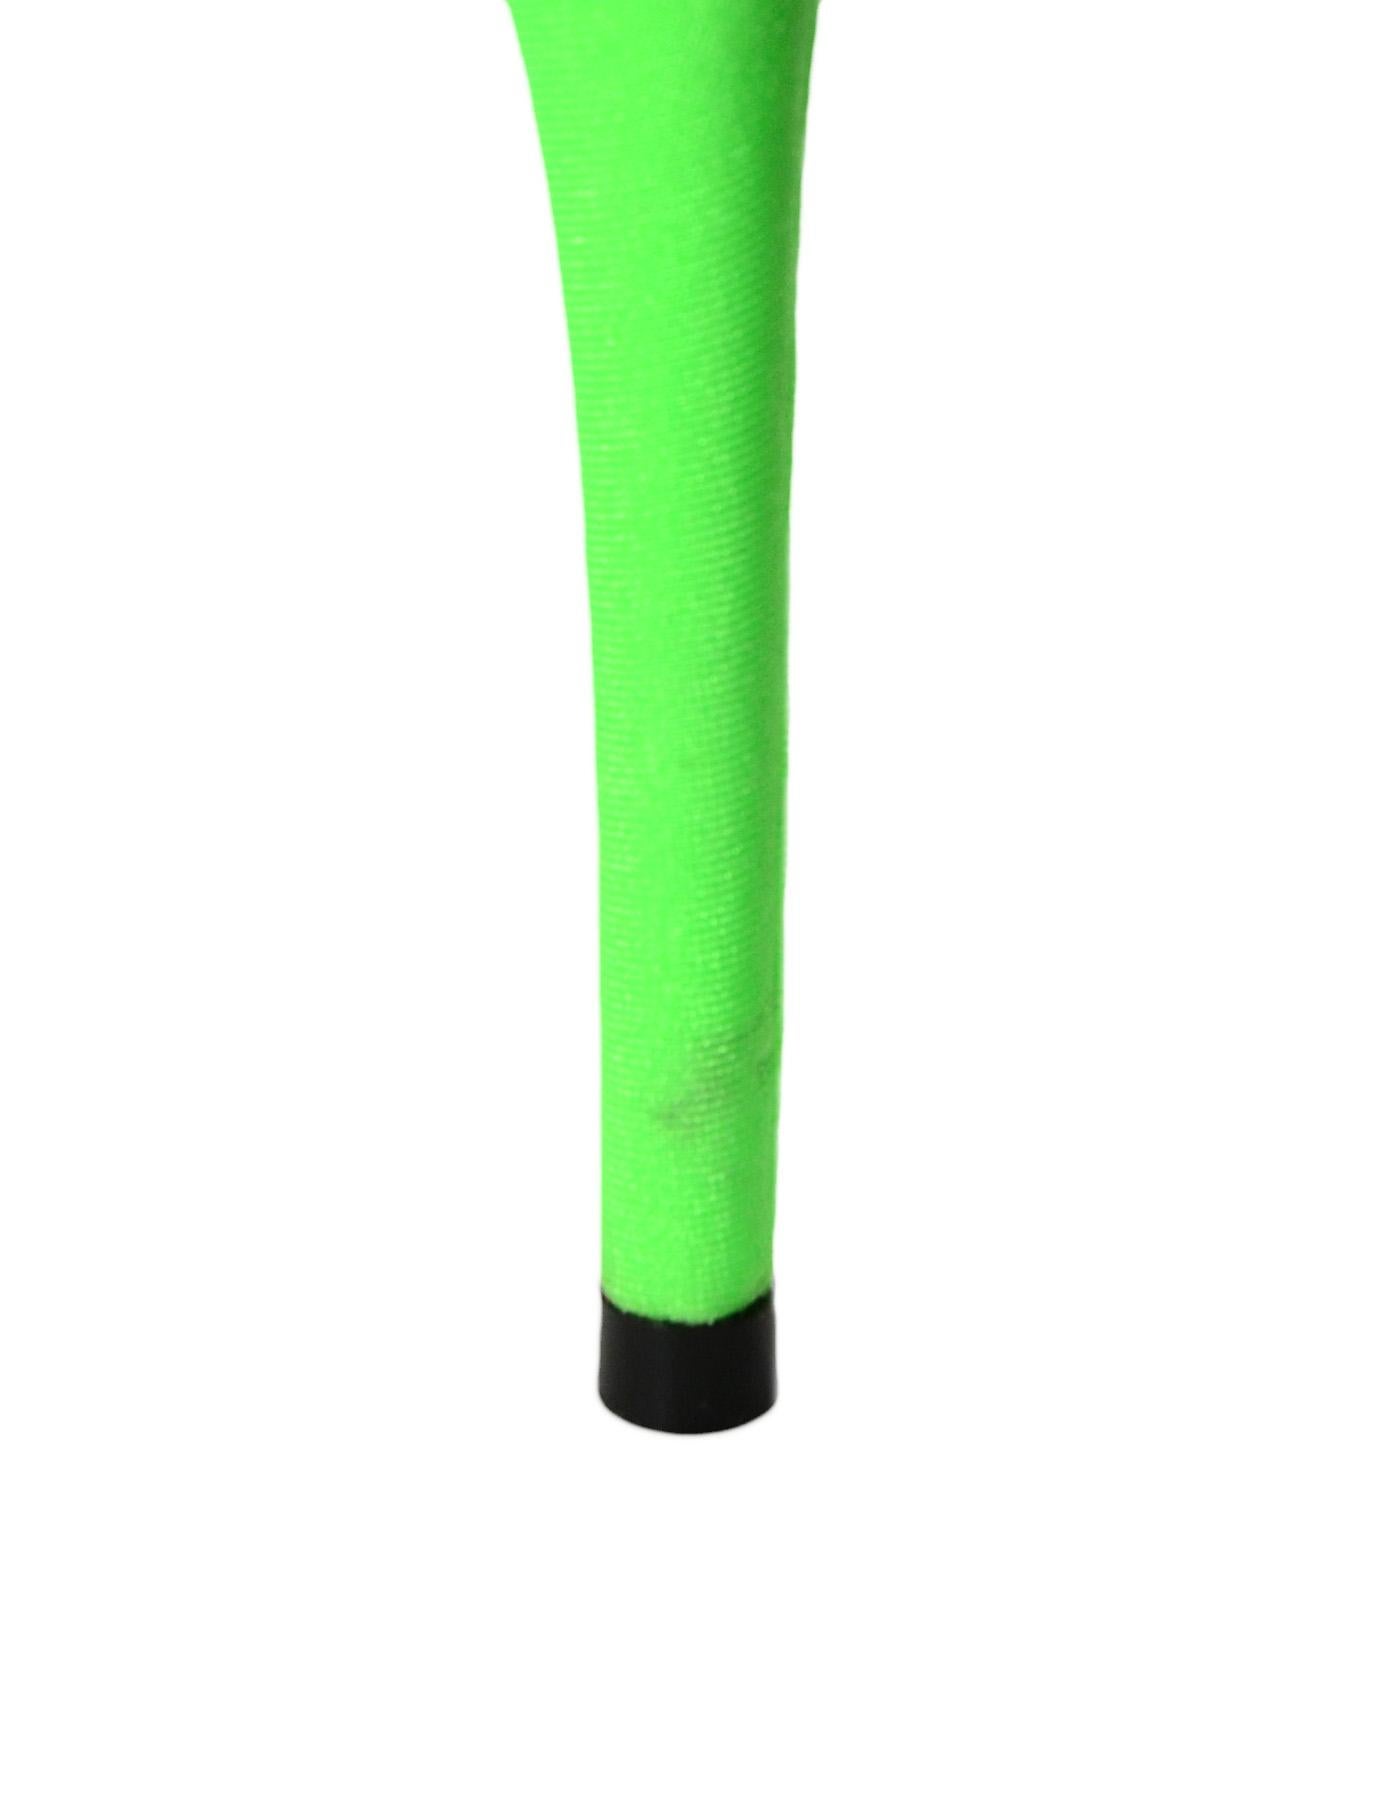 Balenciaga Neon Green Spandex Extreme Pointed Toe Knife Pumps sz 38.5 rt. $695 1